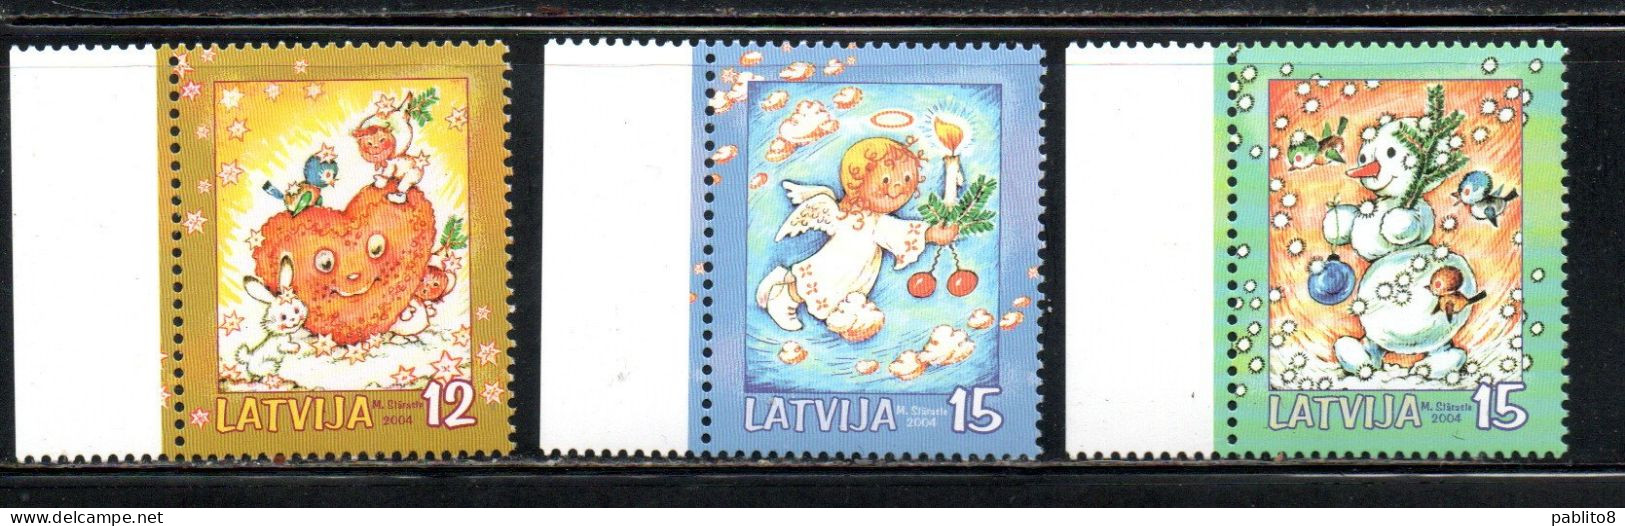 LATVIA LETTLAND LETTONIA LATVIJA 2004 CHRISTMAS NATALE NOEL WEIHNACHTEN NAVIDAD COMPLETE SET SERIE COMPLETA MNH - Lettland